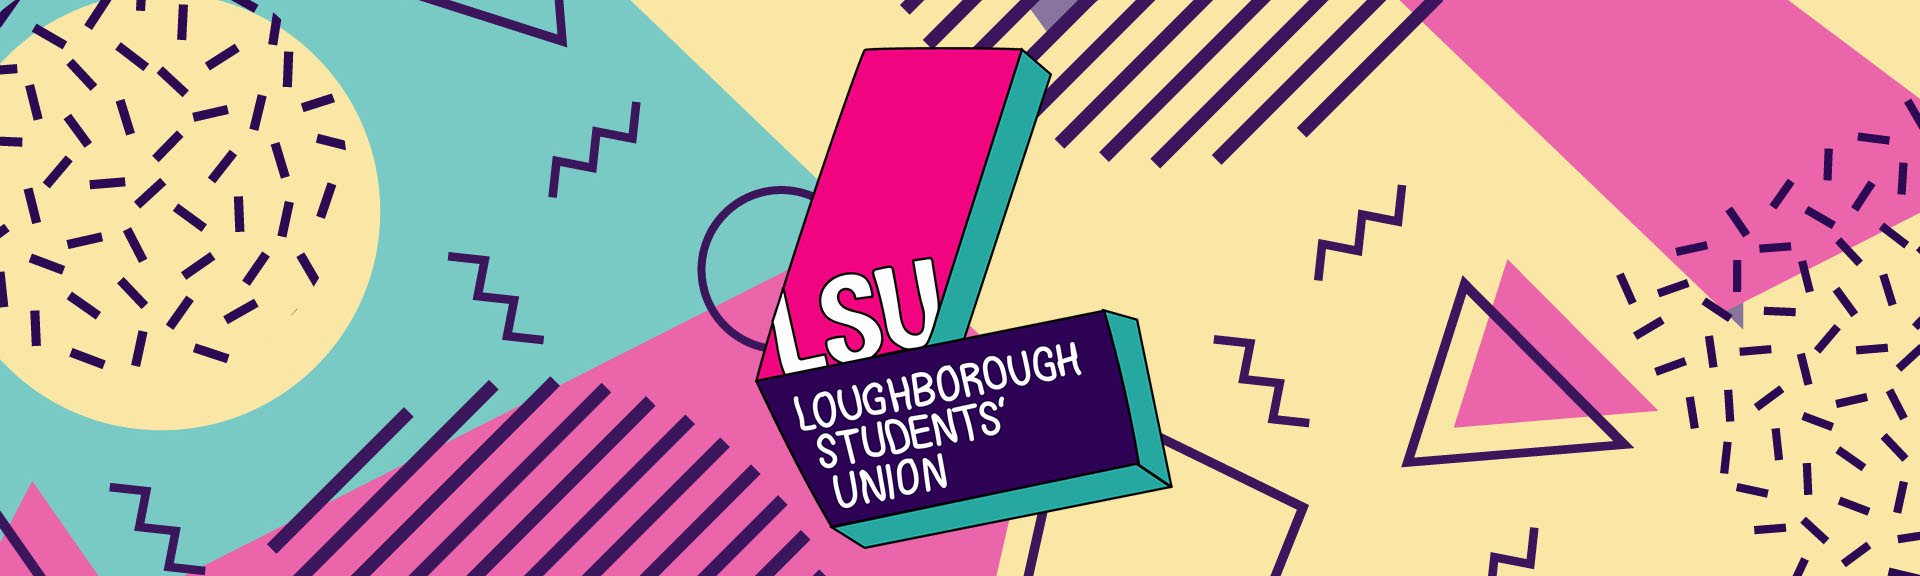 Loughborough Students' Union